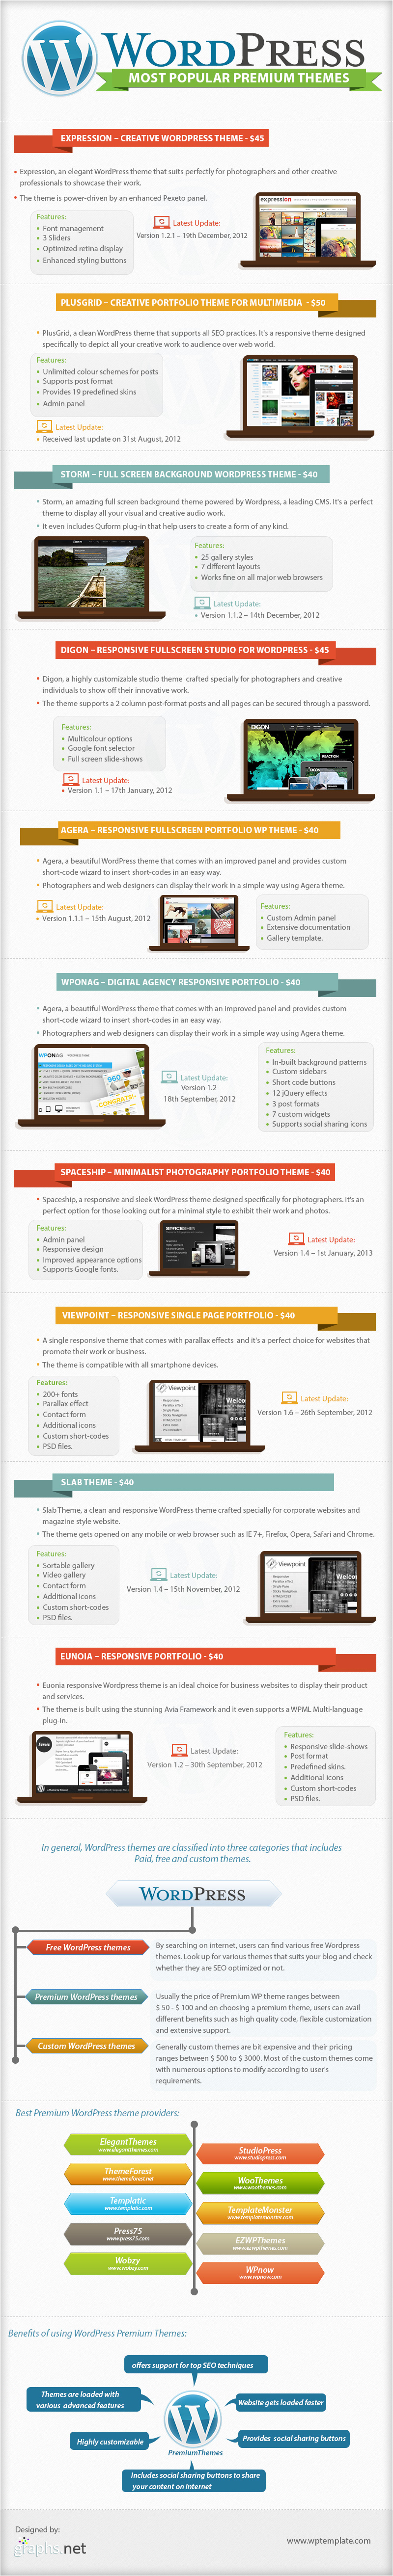 Most Popular WordPress Premium Themes (infographic)